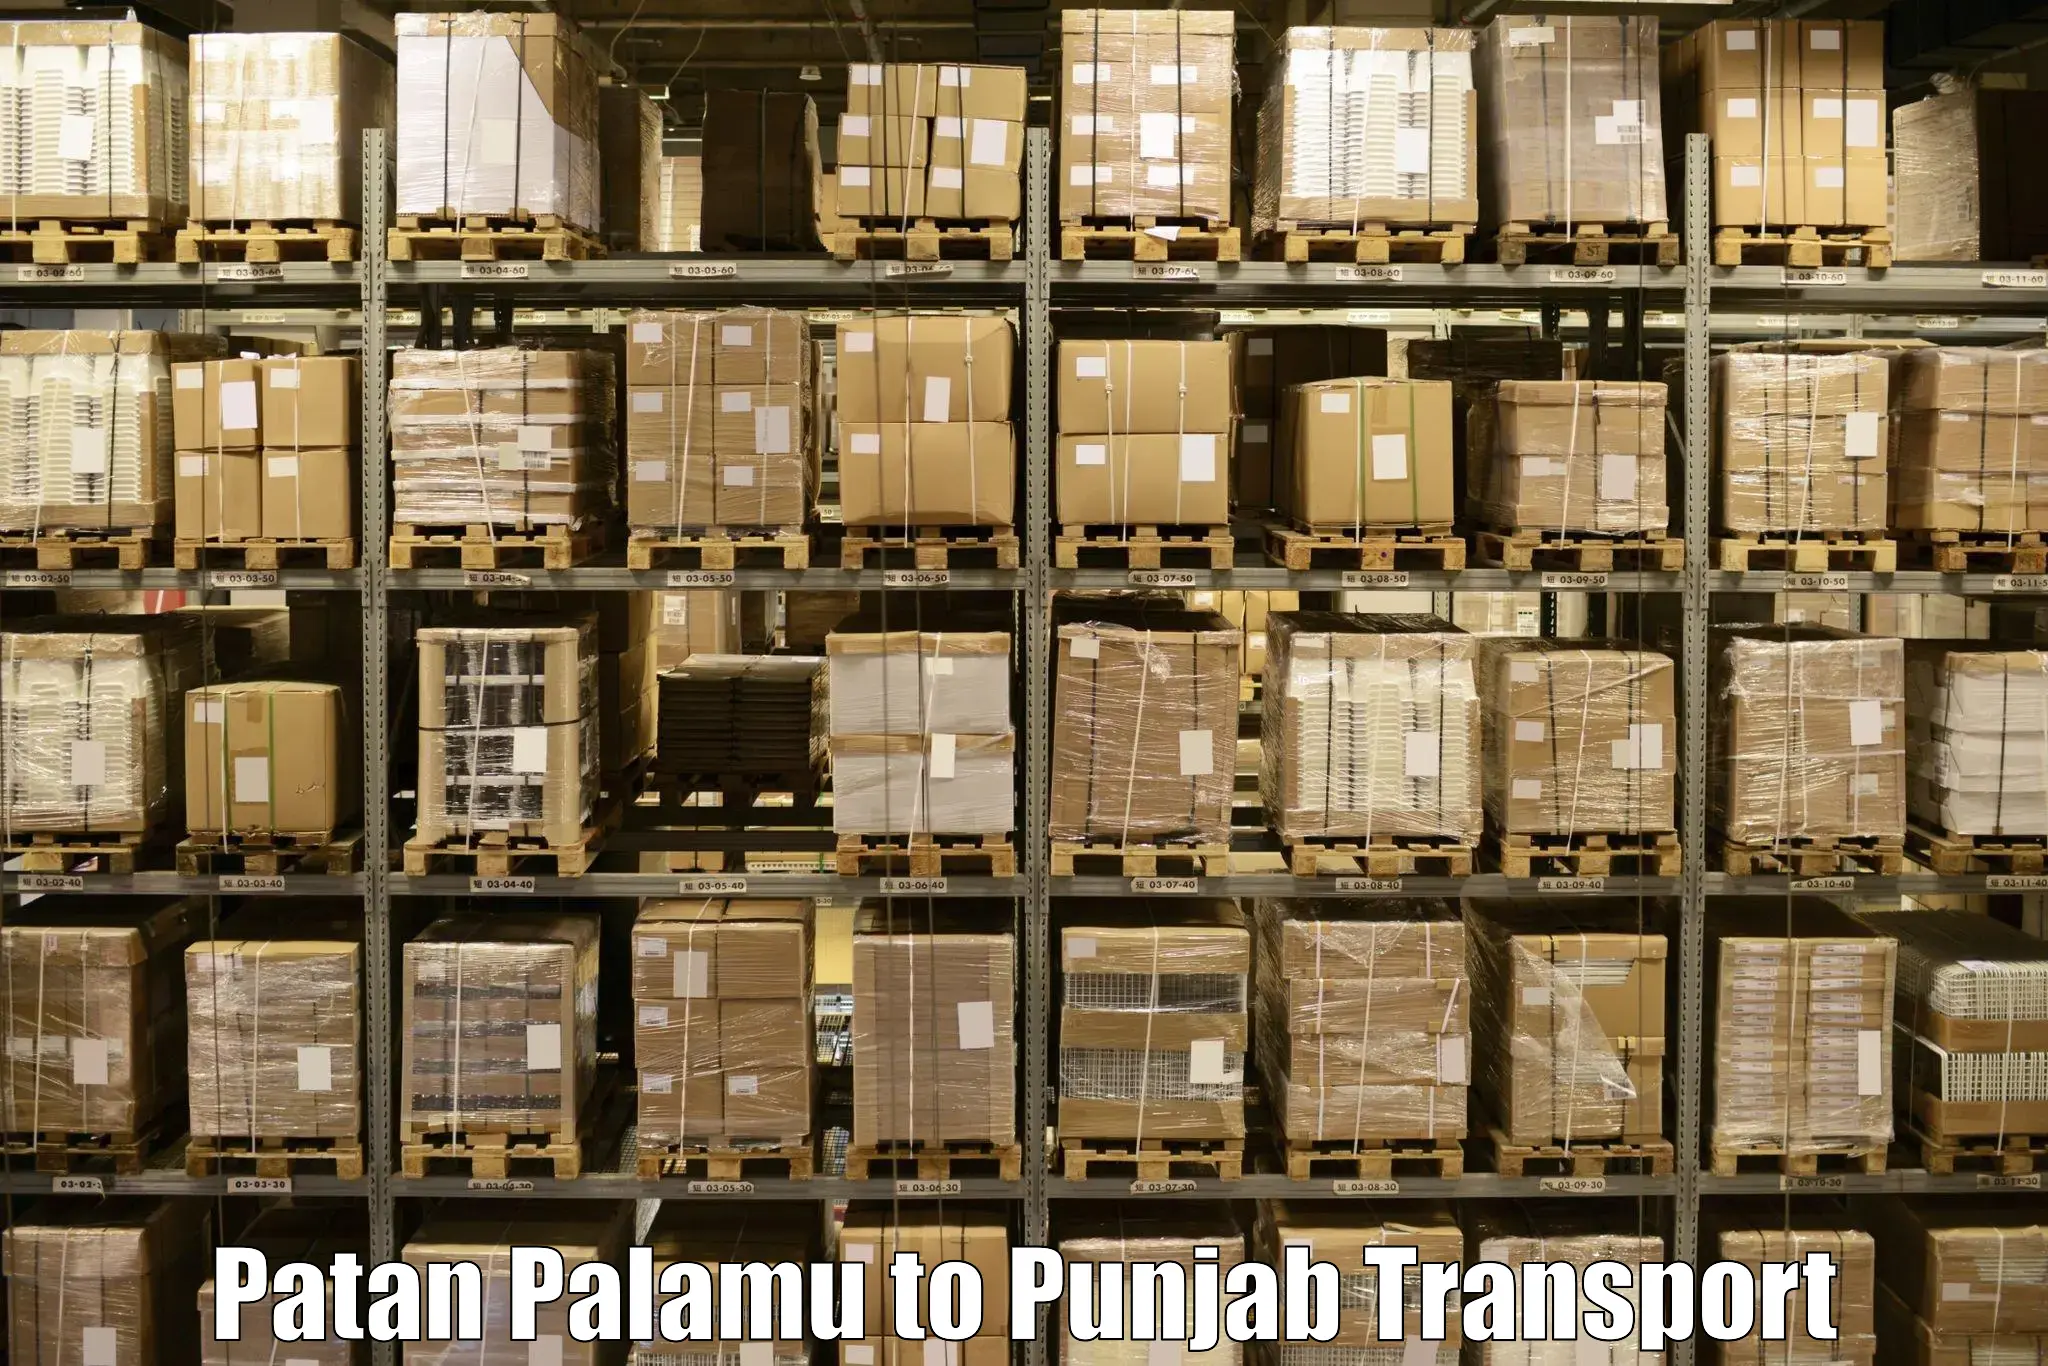 Domestic goods transportation services Patan Palamu to Faridkot